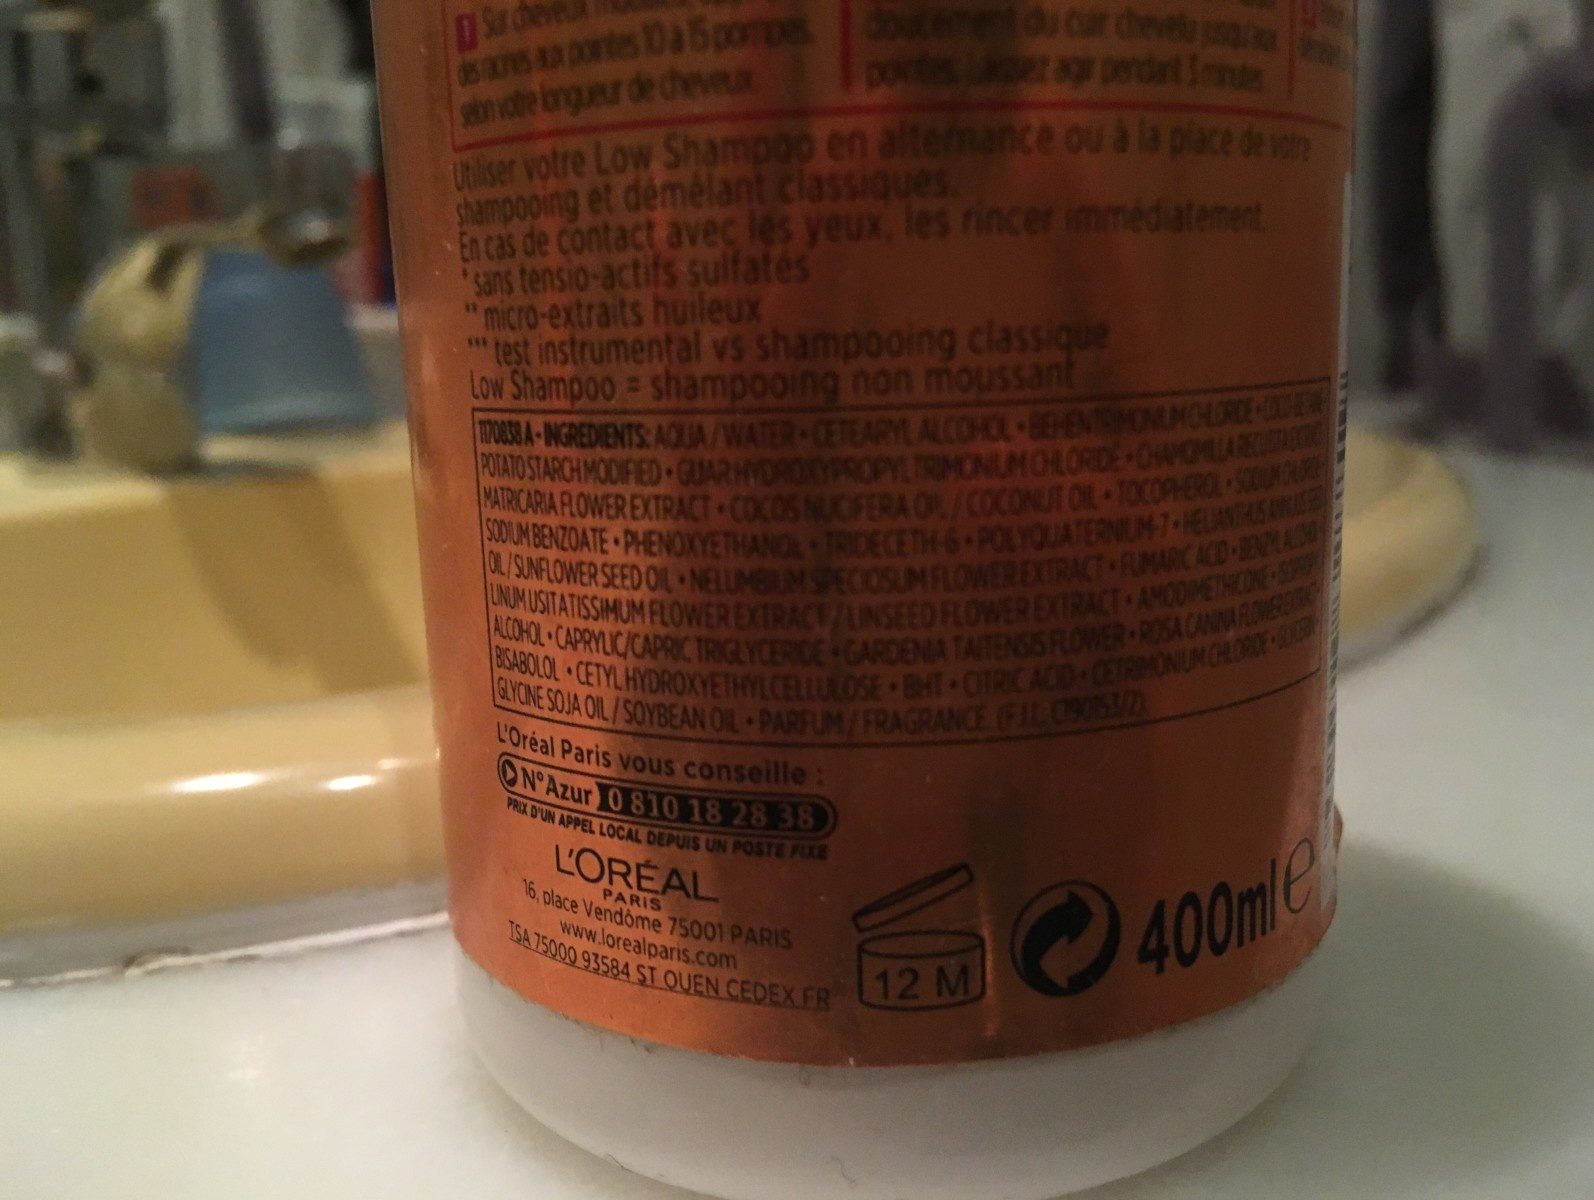 Low shampoo huile extraordinaire - Složení - fr